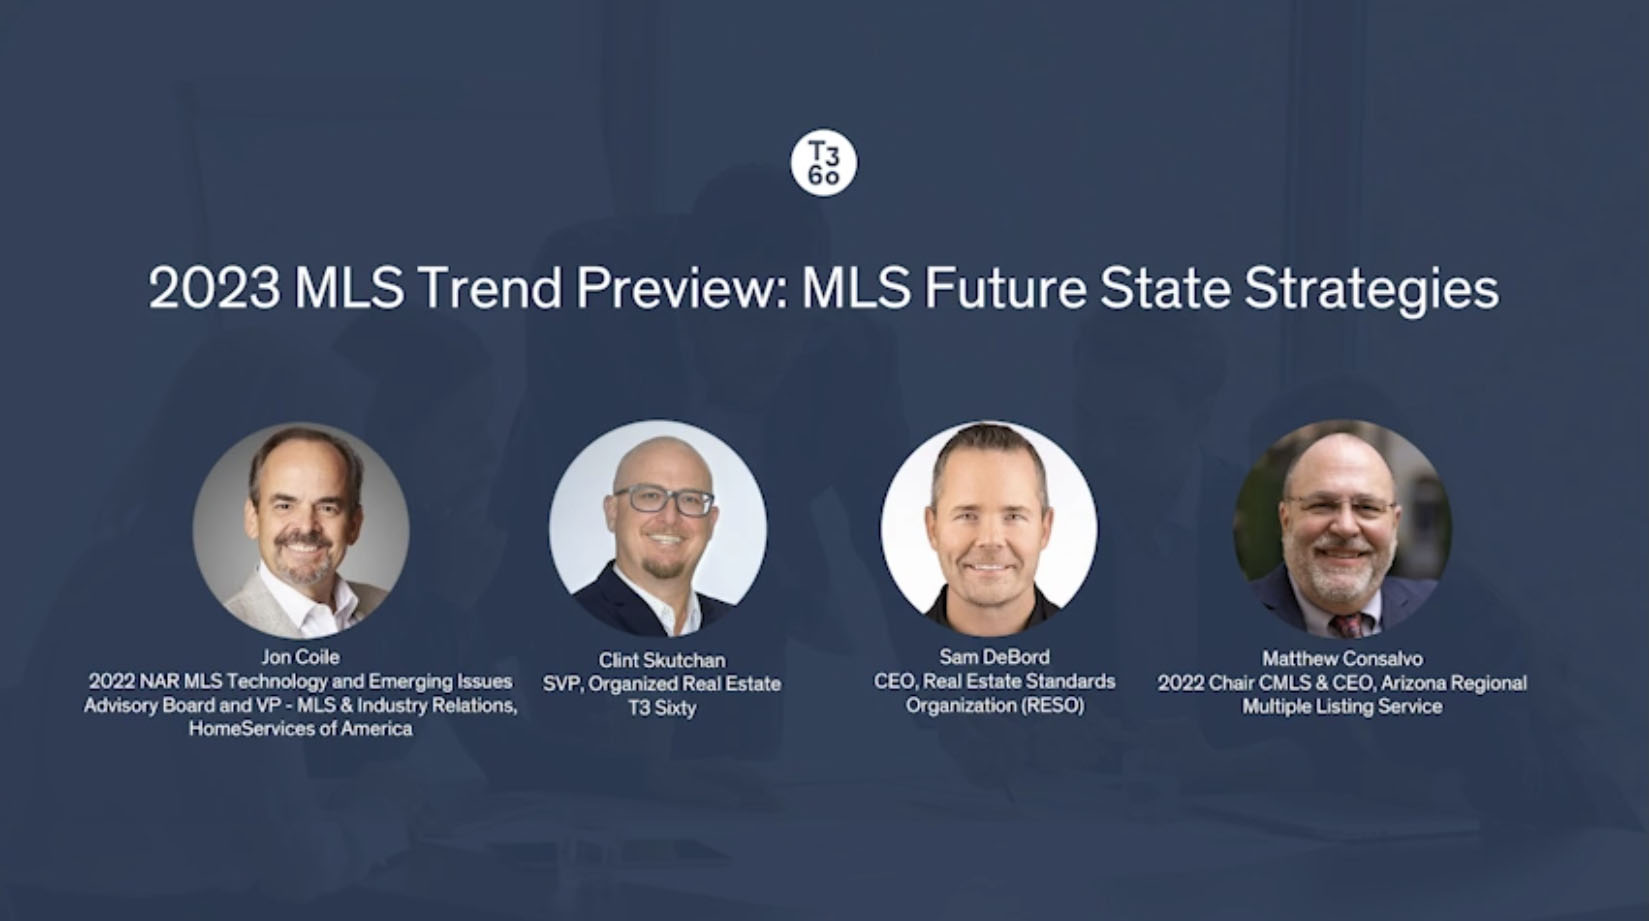 Video: 2323 MLS Trend Preview - MLS Future State Strategies